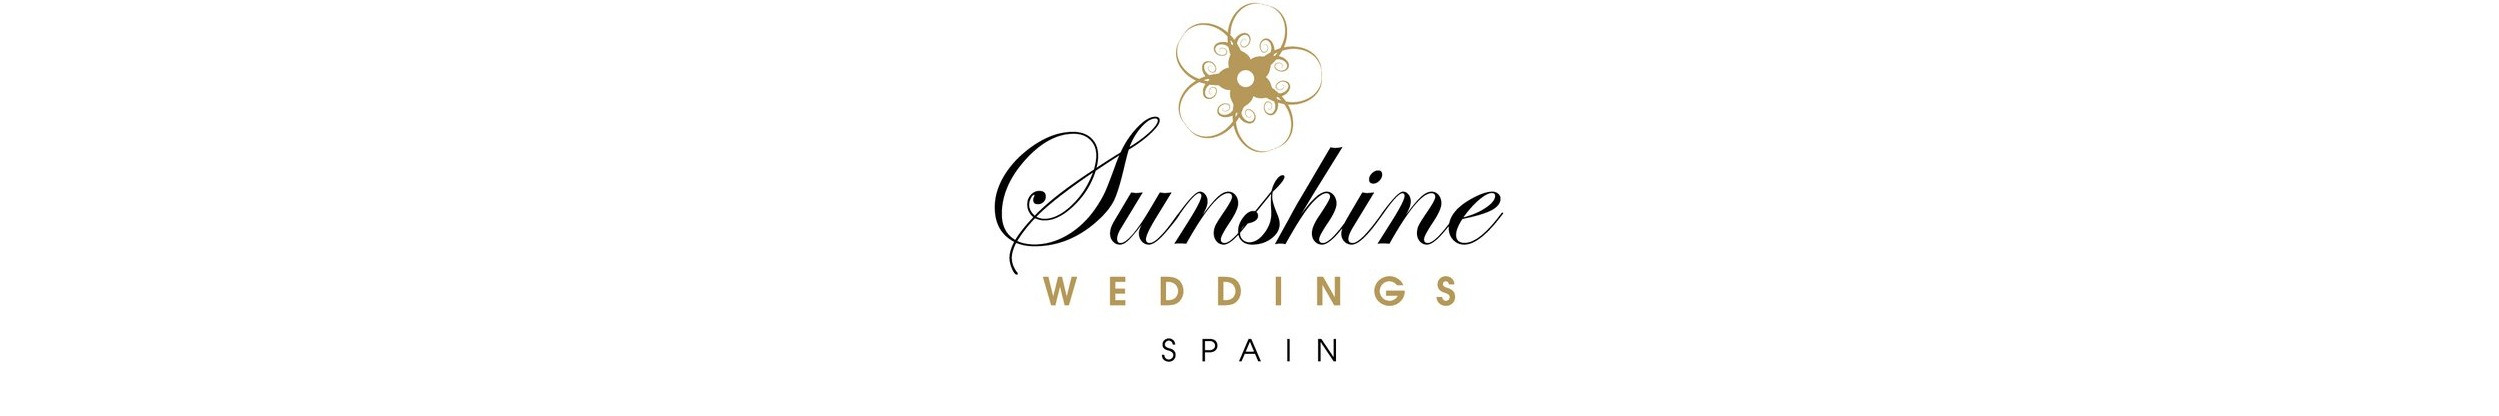 Sunshine Weddings Spain - Wedding Planner